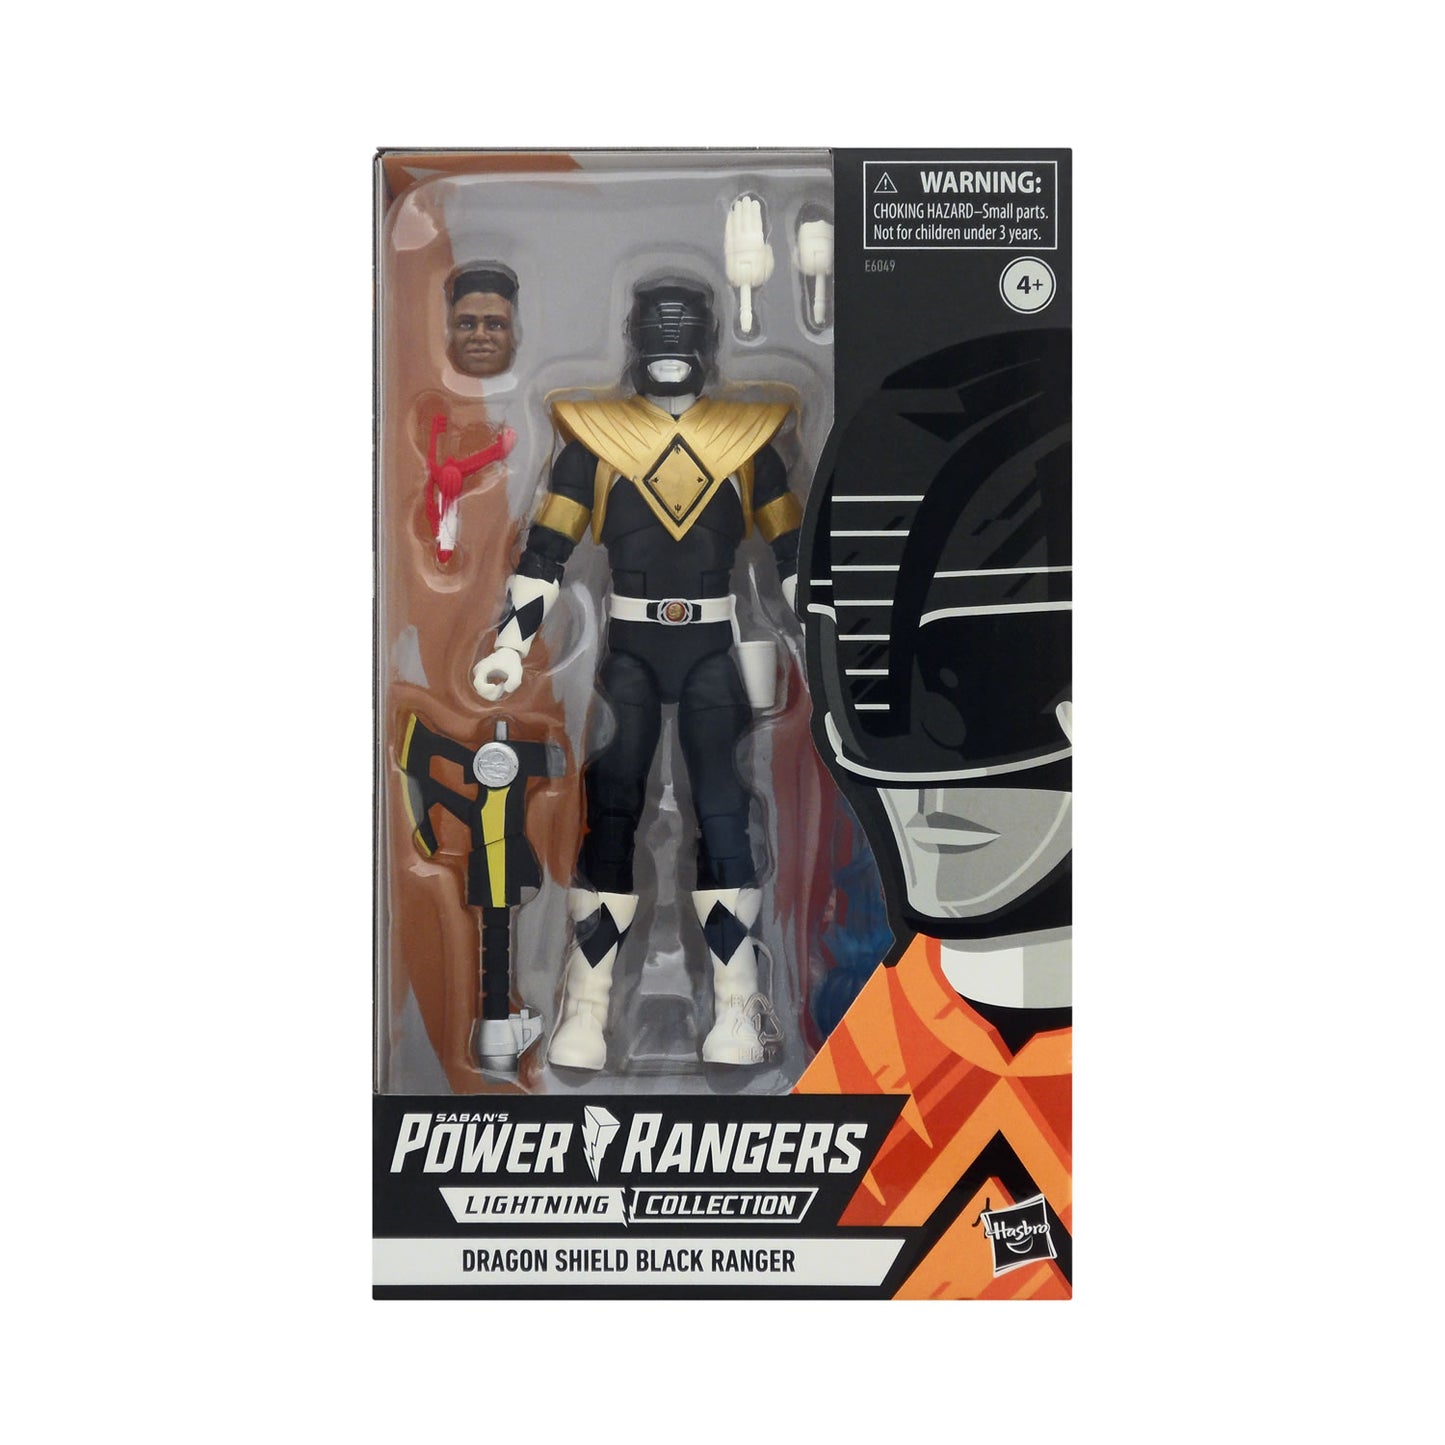 Power Rangers Lightning Collection Dragon Shield Black Ranger